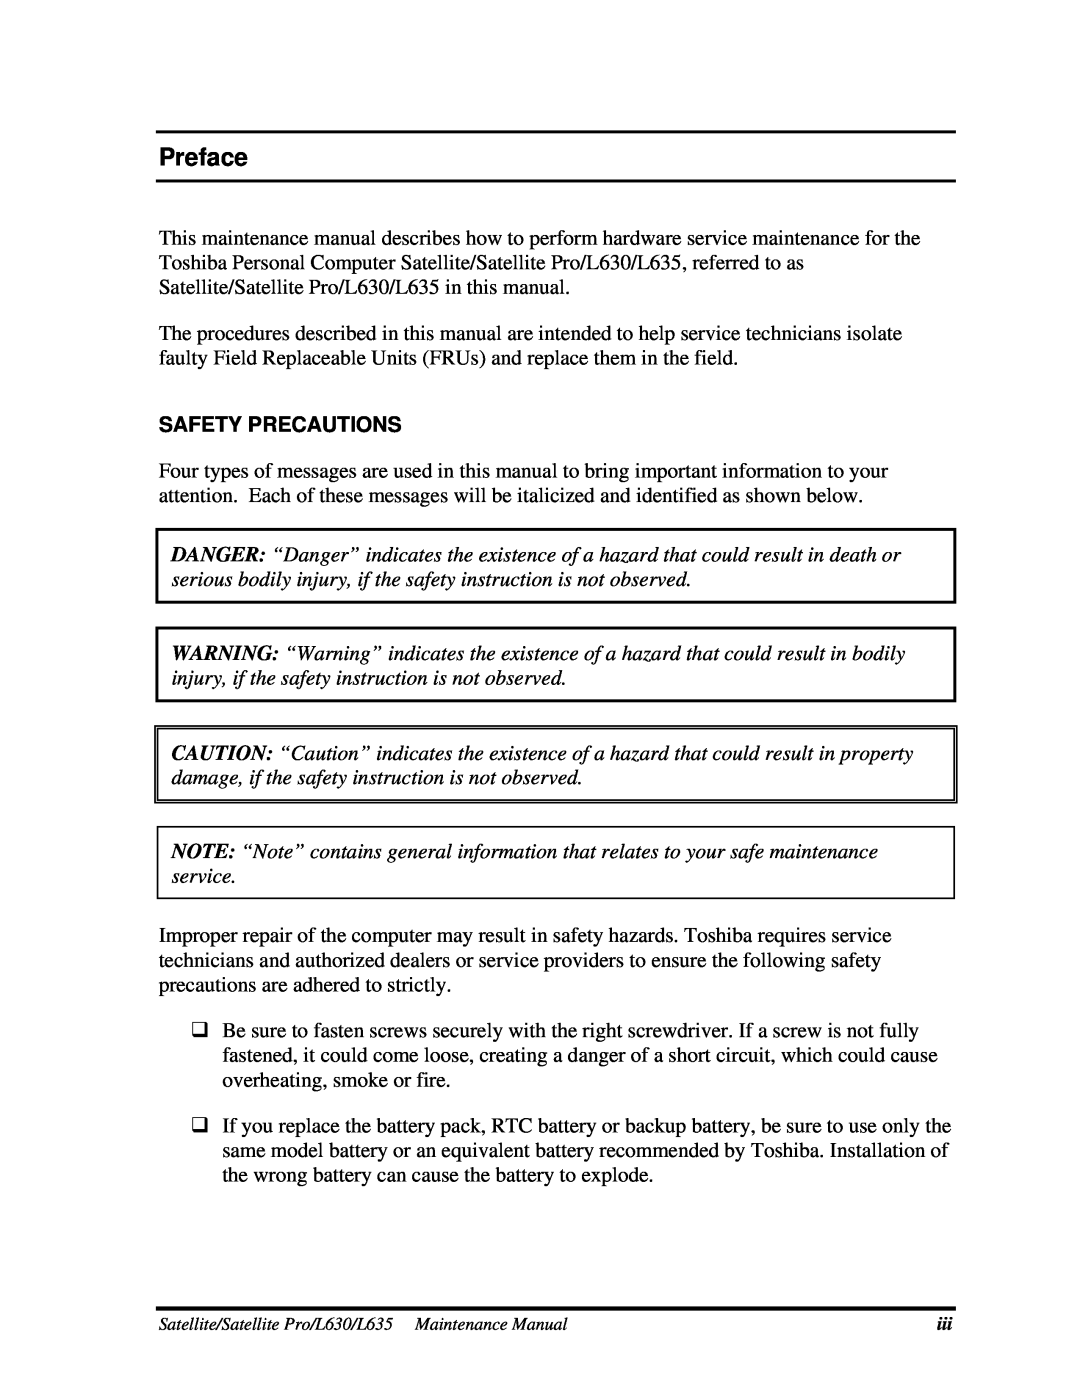 Toshiba L630, L635 manual Preface, Safety Precautions 